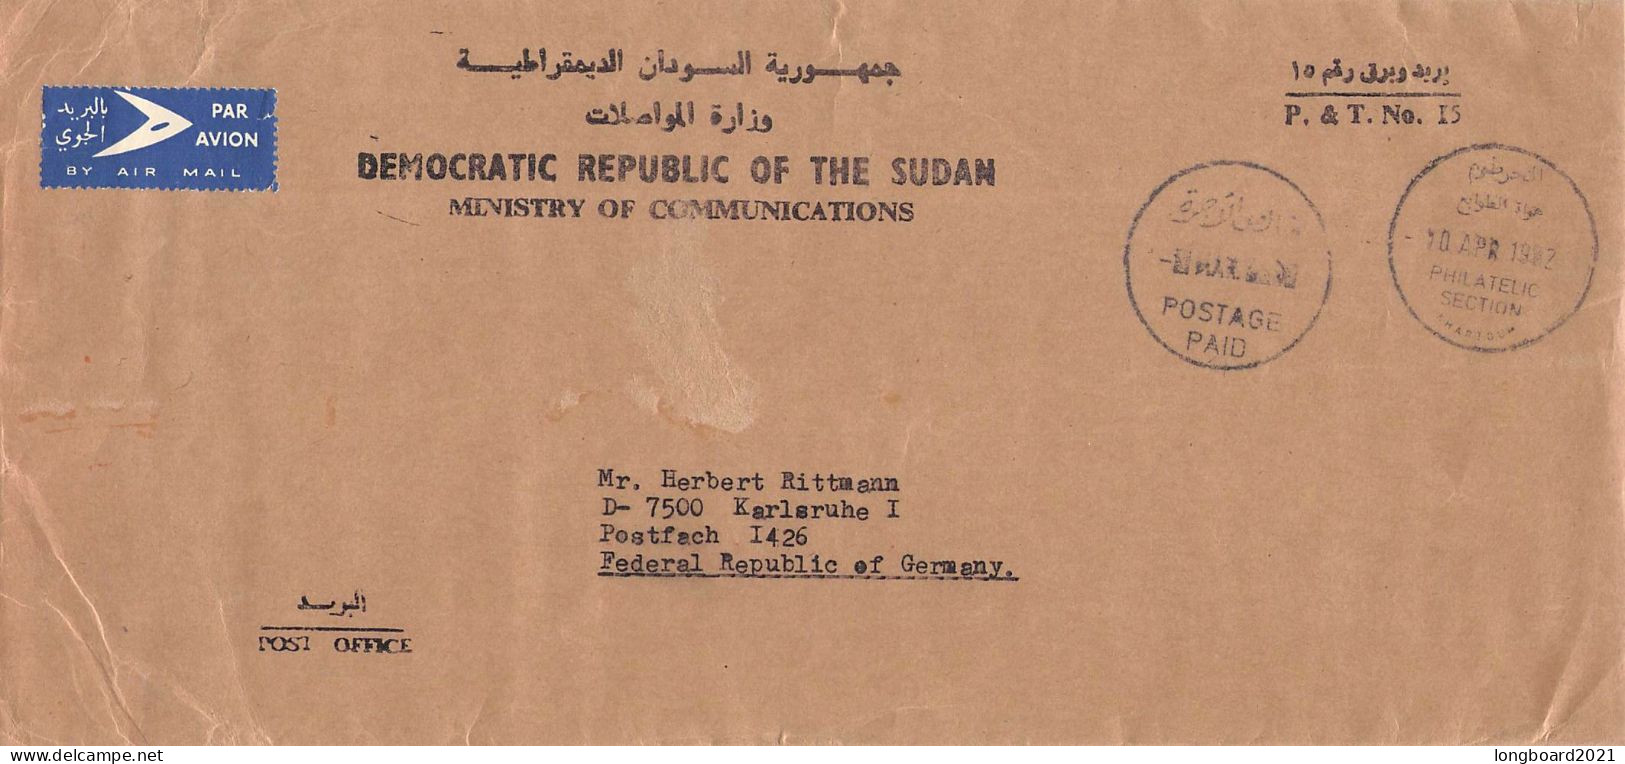 SUDAN - AIRMAIL POSTAGE PAID 1982 - KARLSRUHE / DE. / 5216 - Sudan (1954-...)